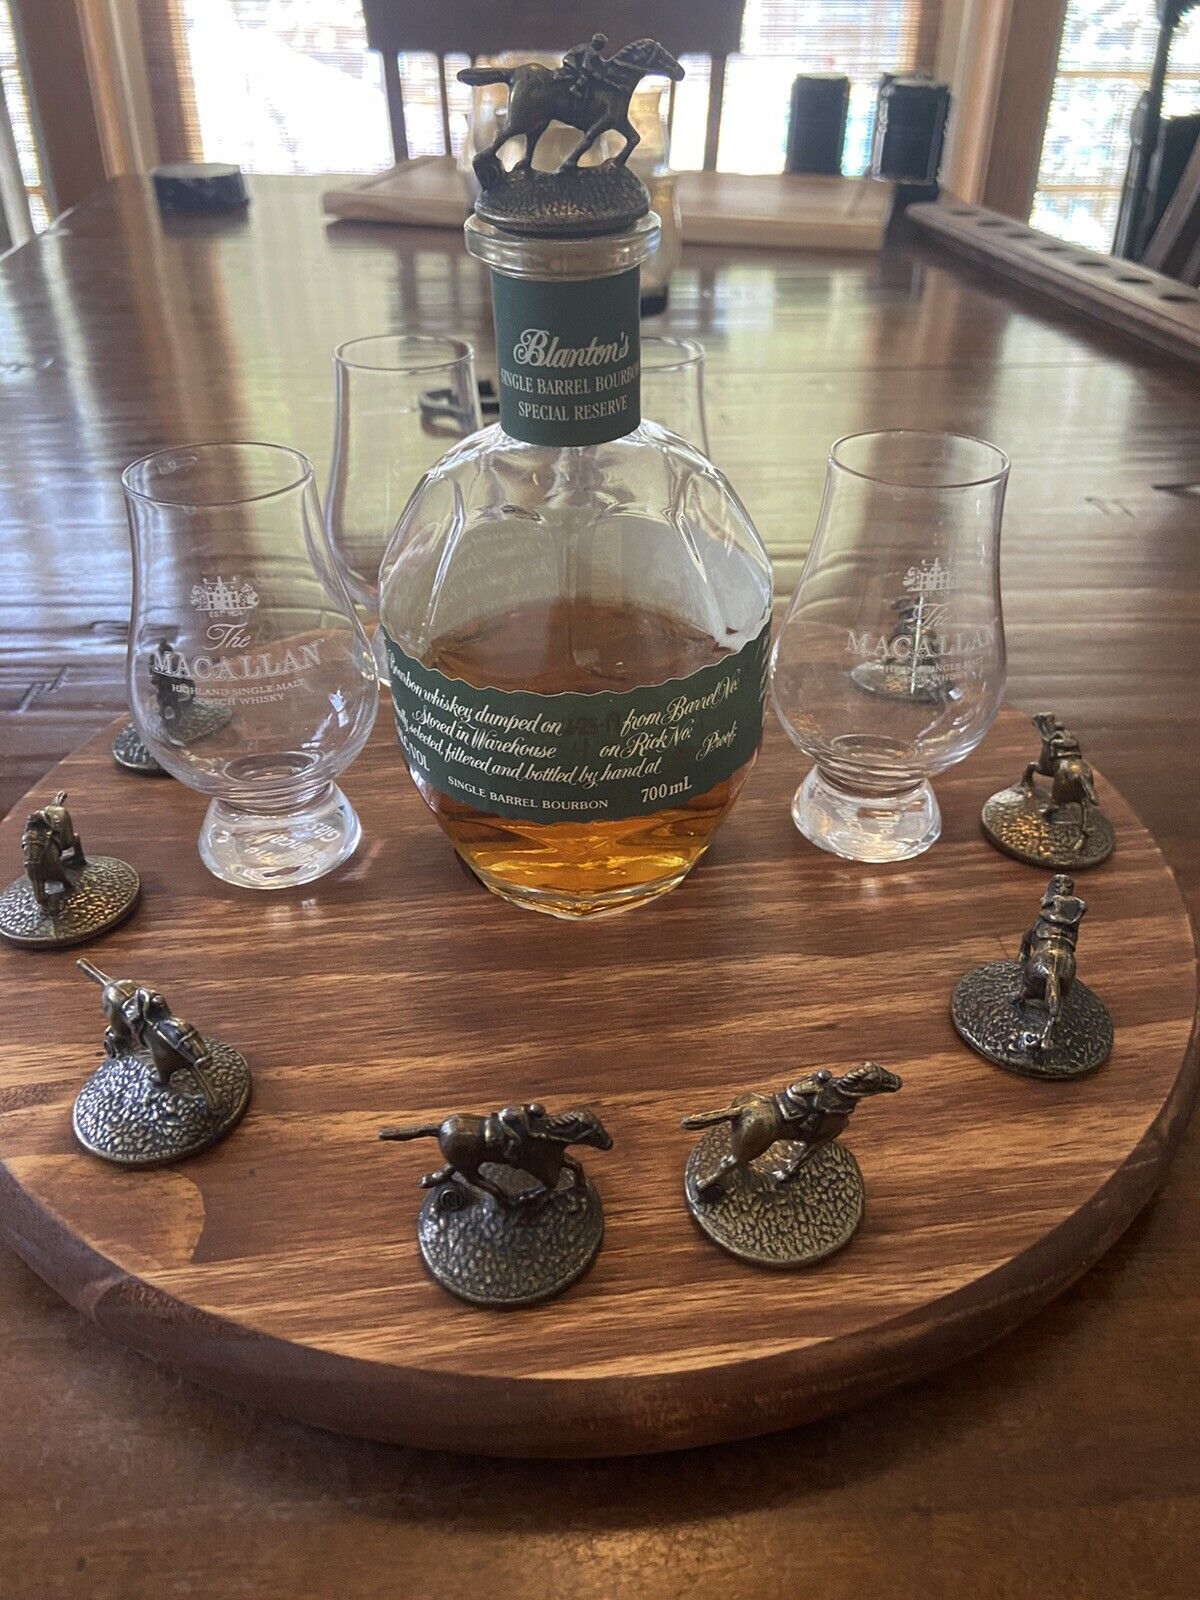 Blanton's Bourbon Round Lighted Cork Display, Blantons, Whiskey